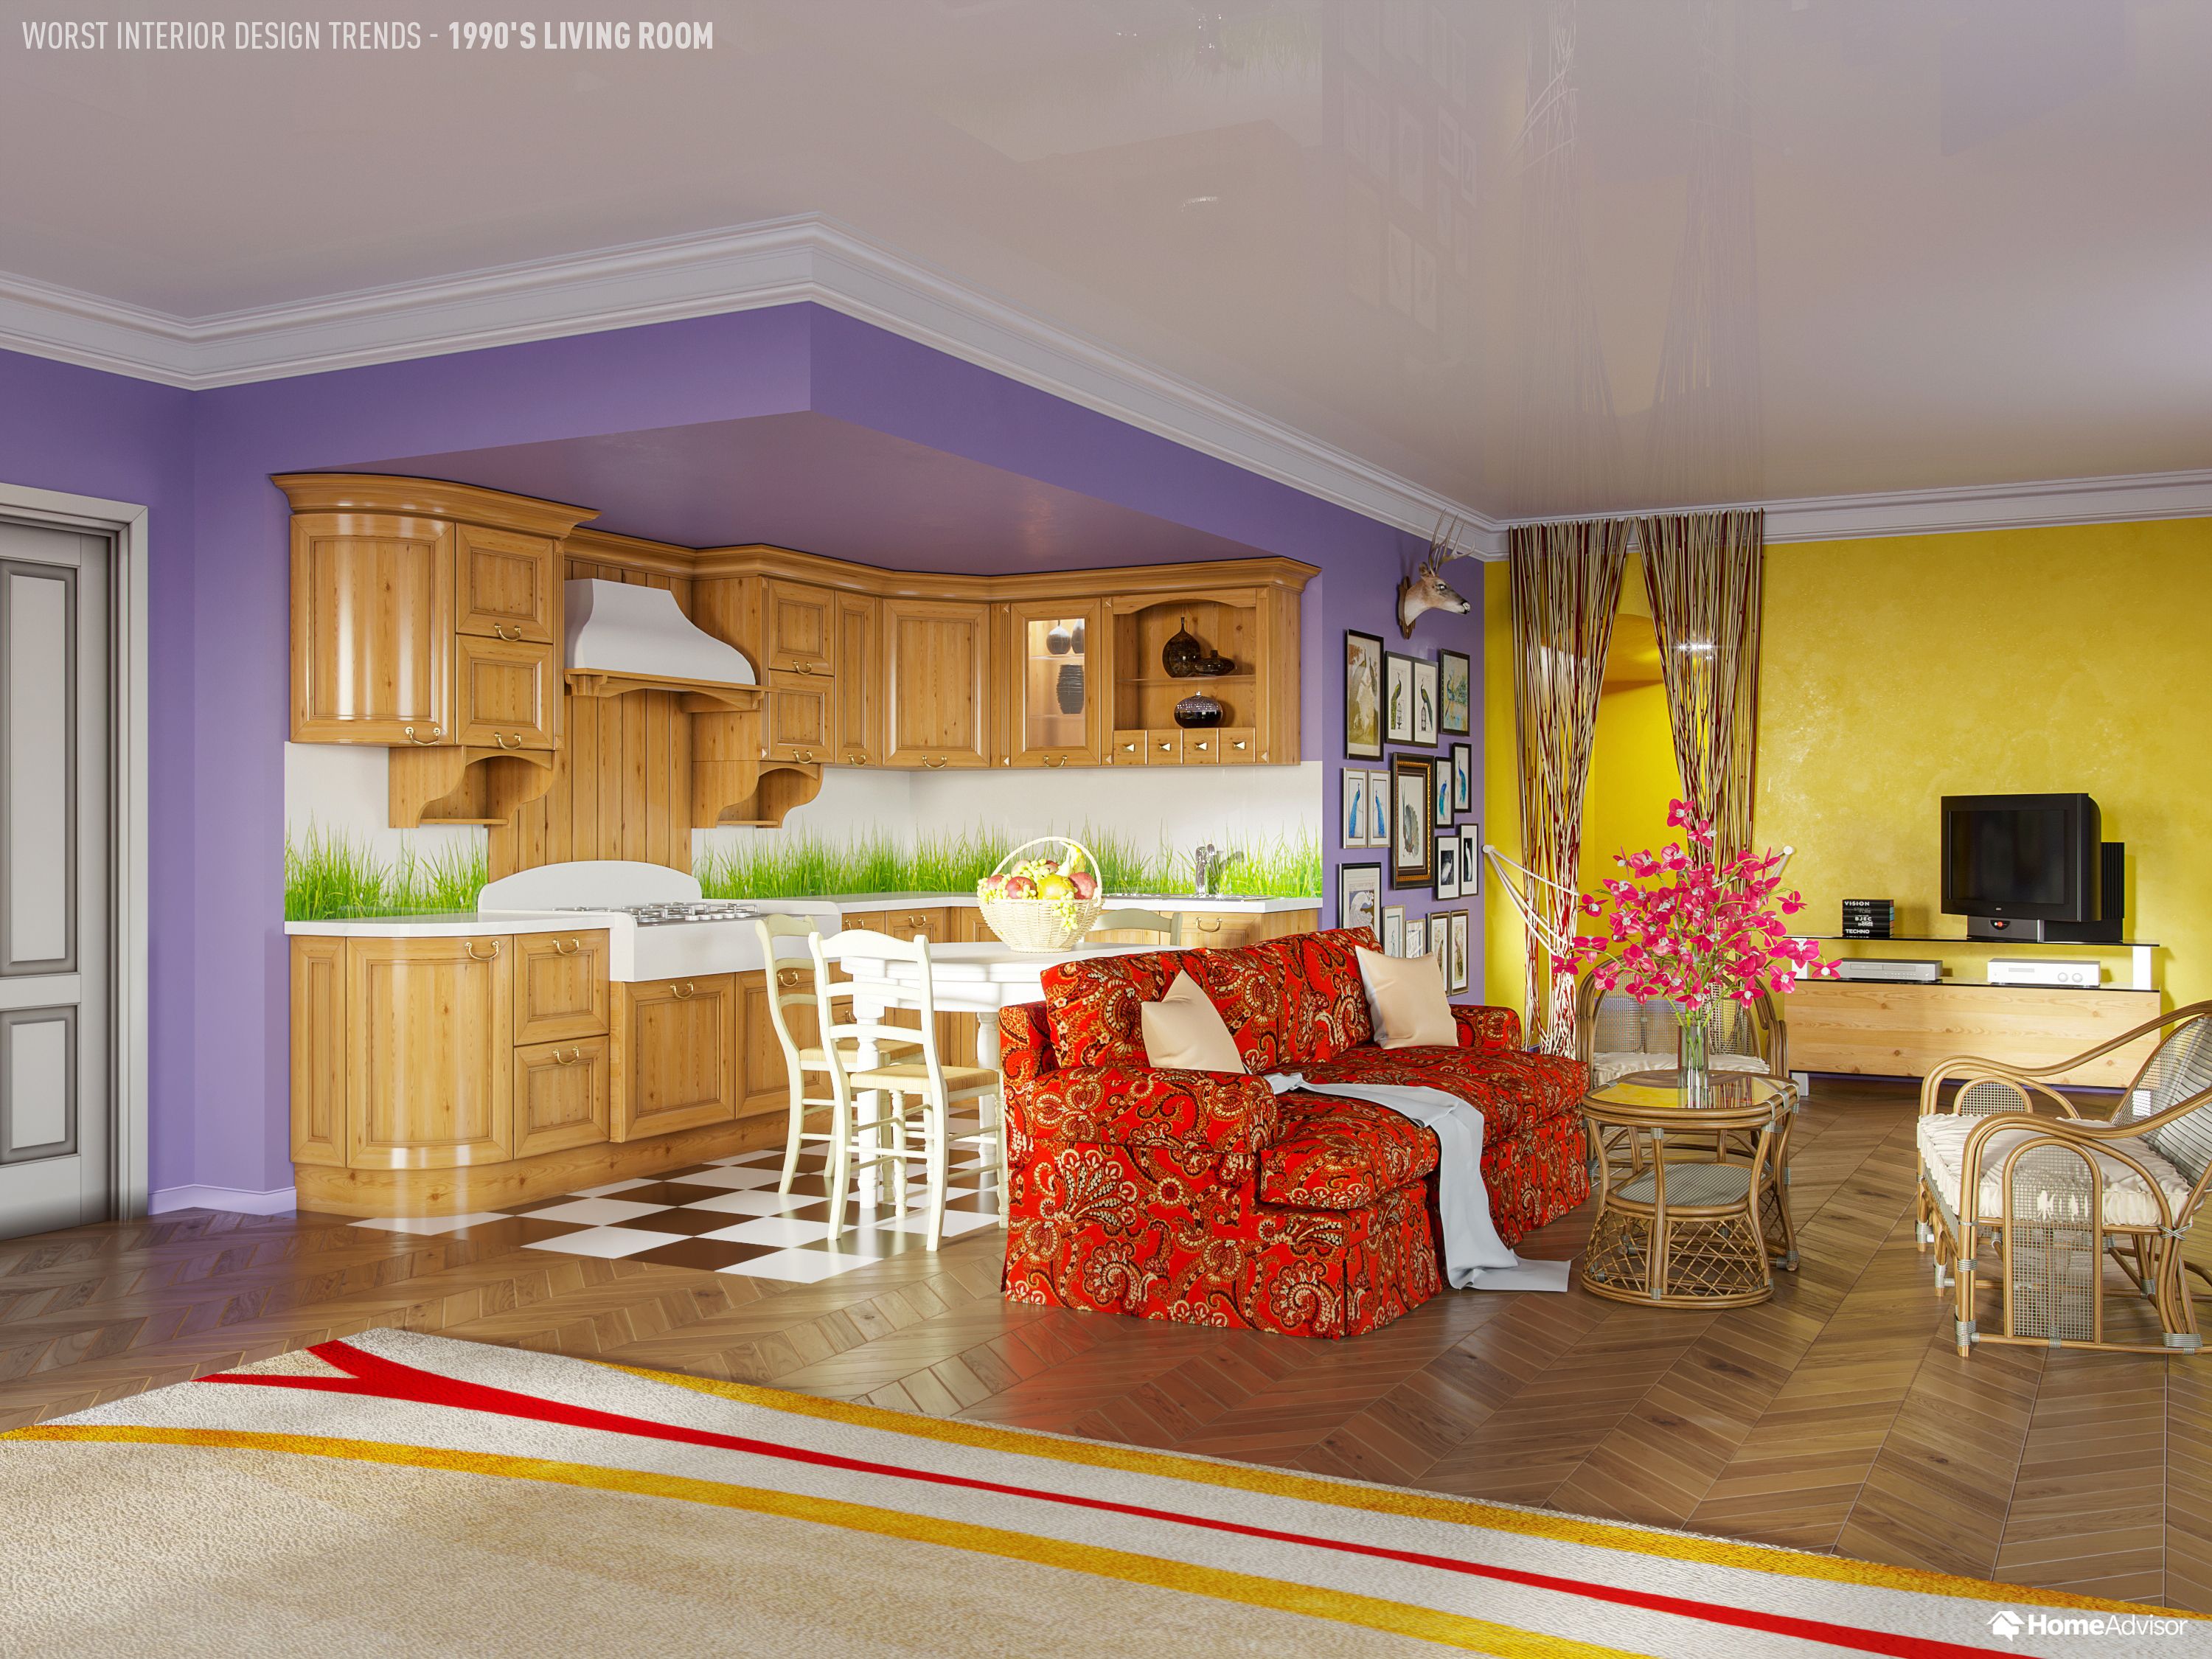 01 Worst Interior Design Trends 1990s Living Room 1559230447 